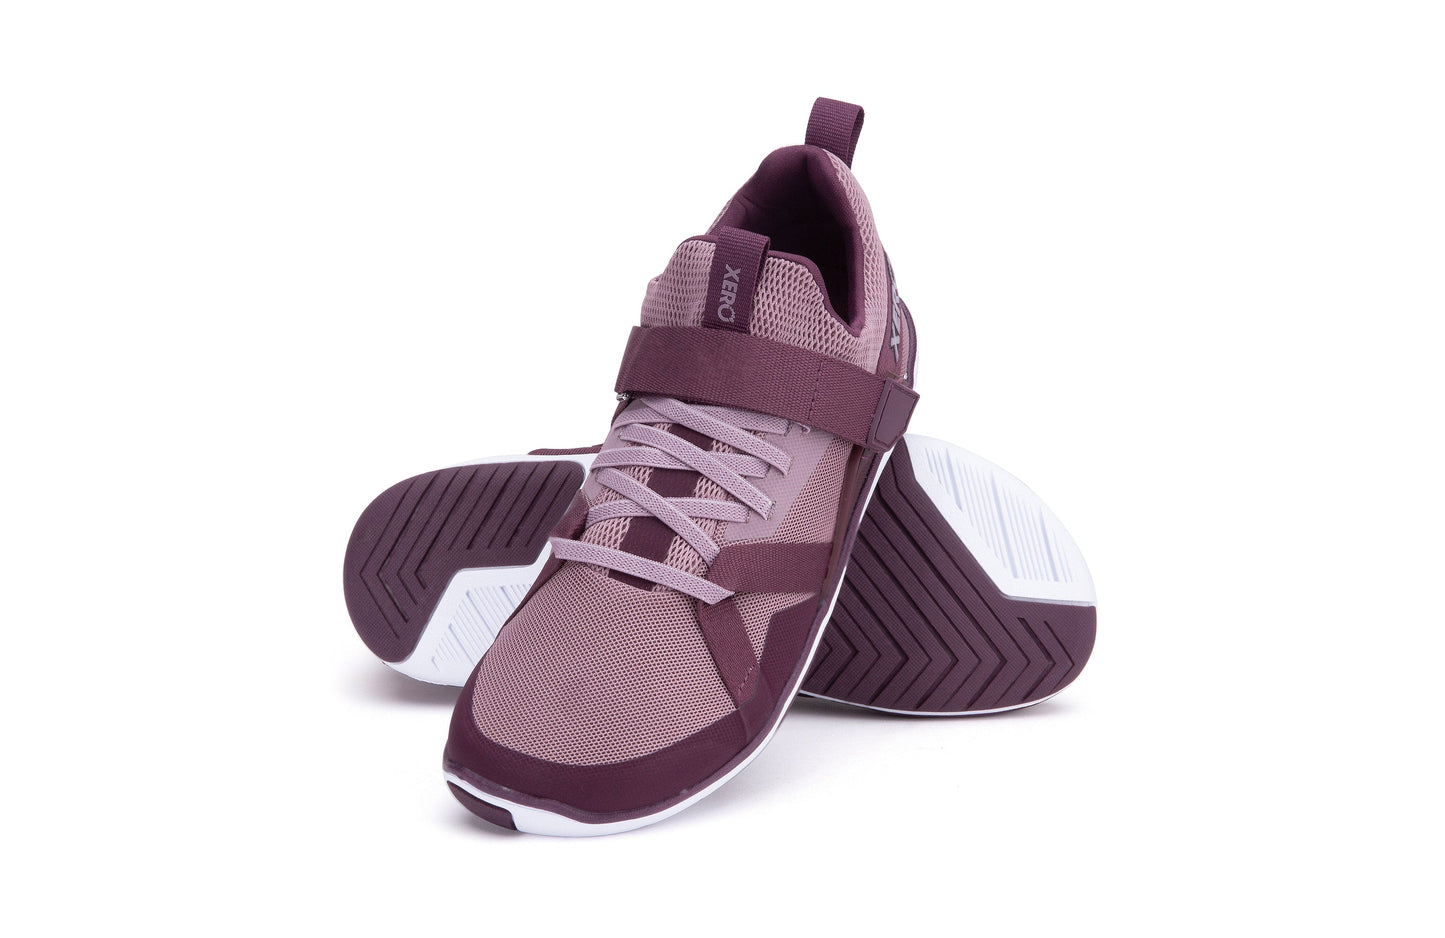 Xero Shoes Forza Trainer Womens barfods træningssko til kvinder i farven elderberry / fig, par